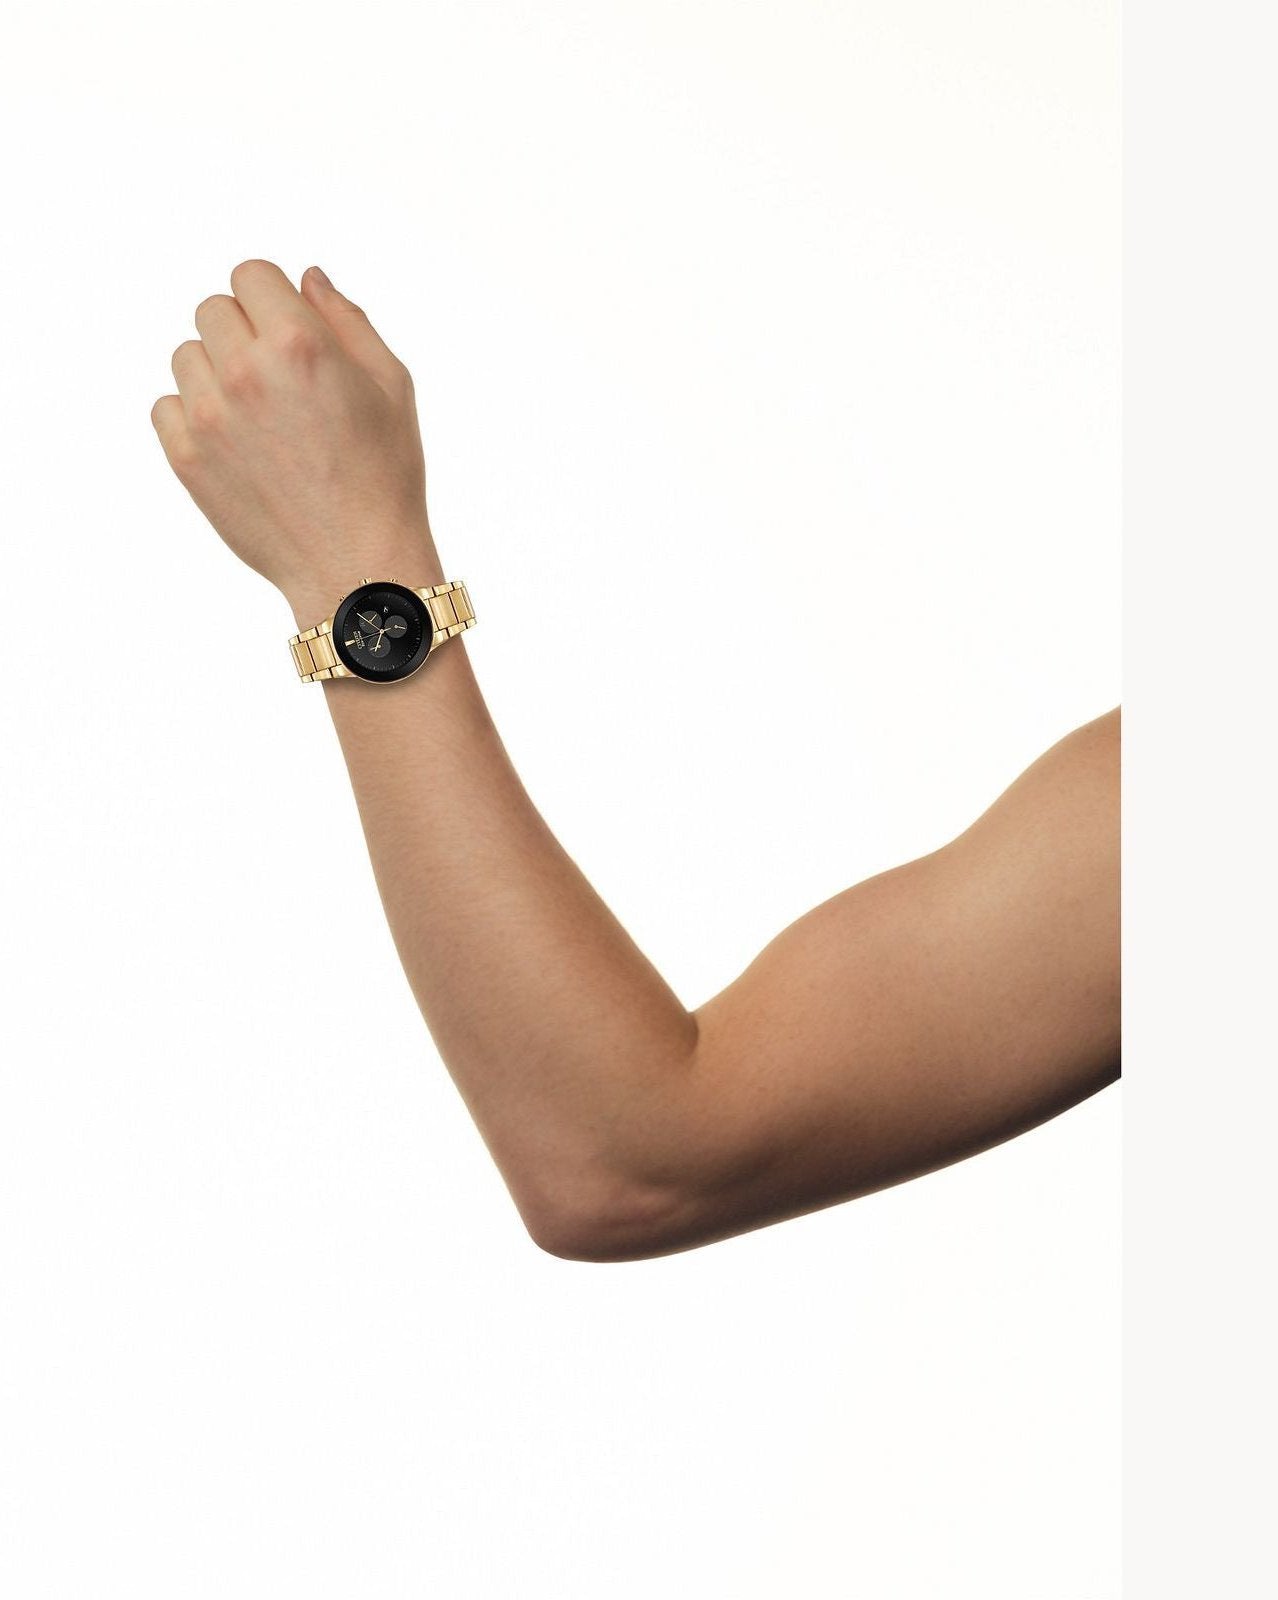 Citizen Eco-Drive Axiom Gold-tone Black dial Watch (Model AT2242-55E)